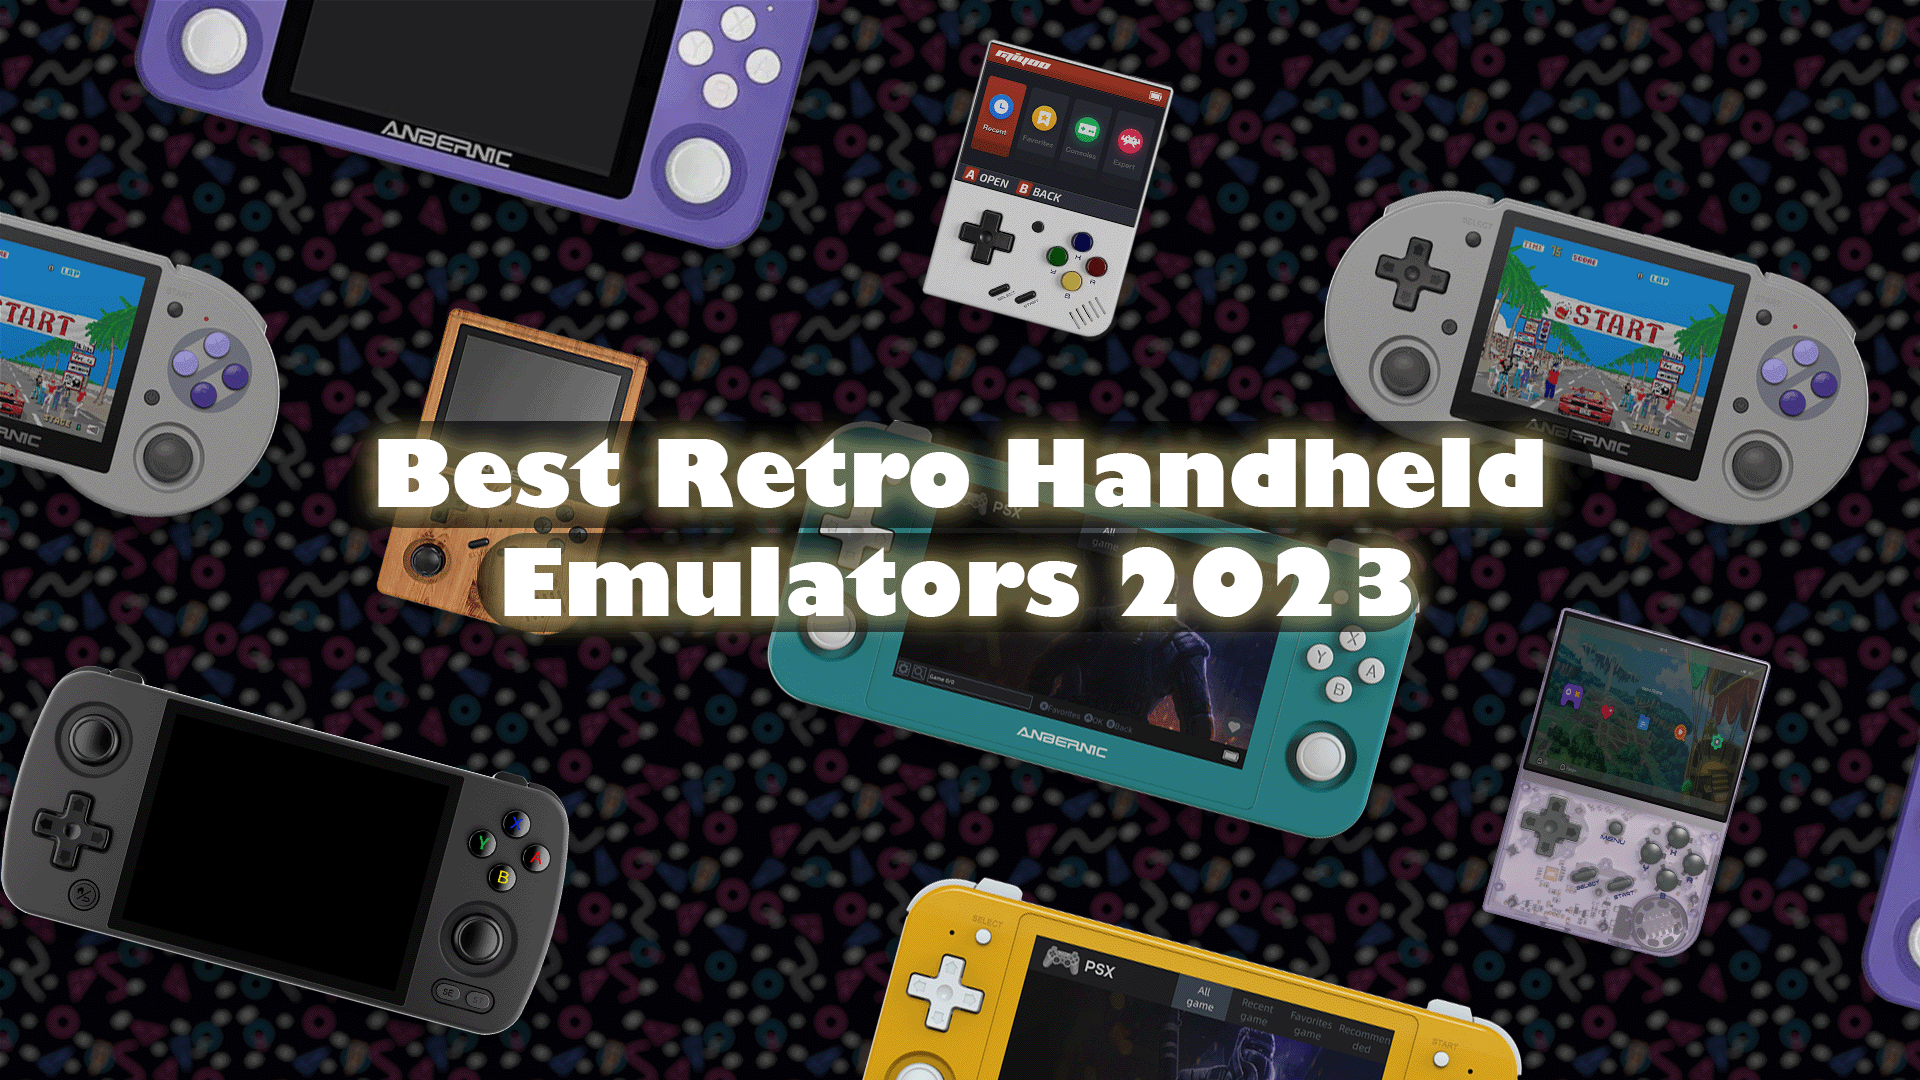 The Best Retro Handheld Gaming Consoles in 2023